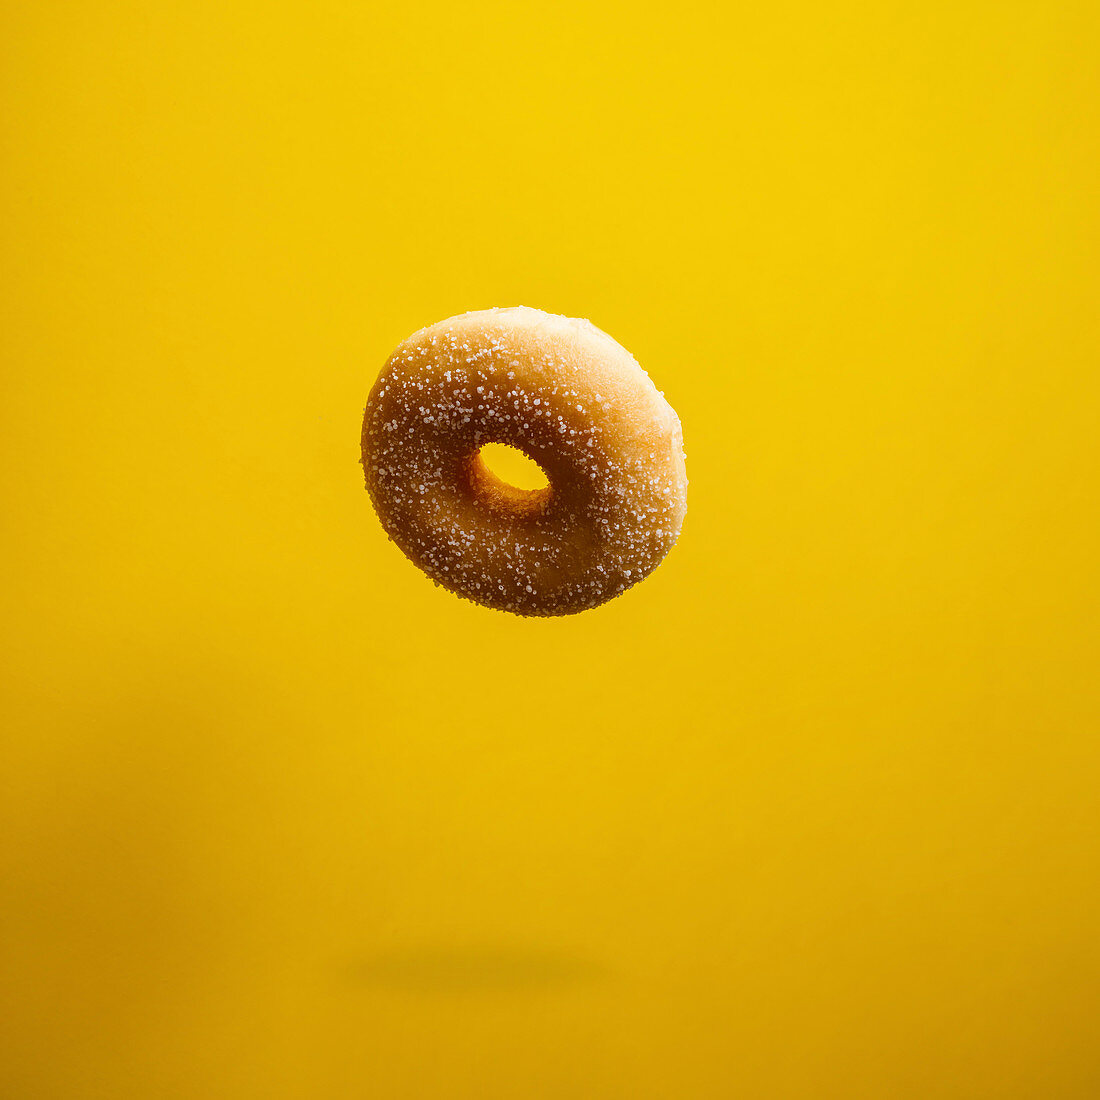 Sugar doughnut falling on yellow background